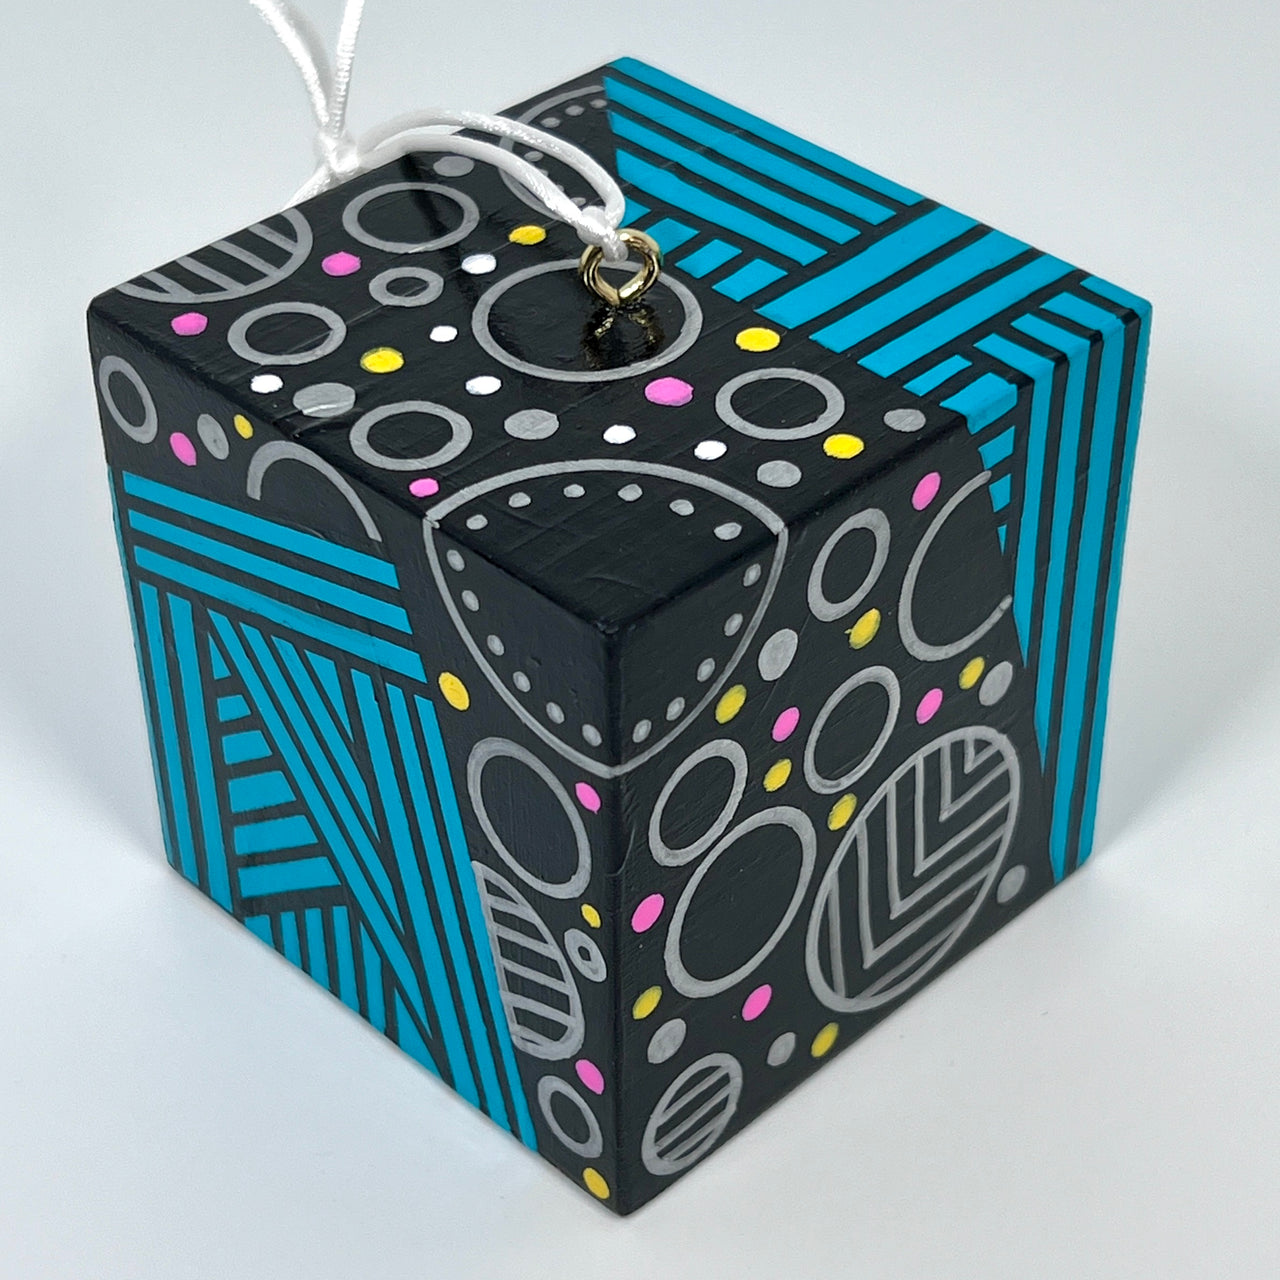 #1 - 3D Cube Art - 2.25" cube